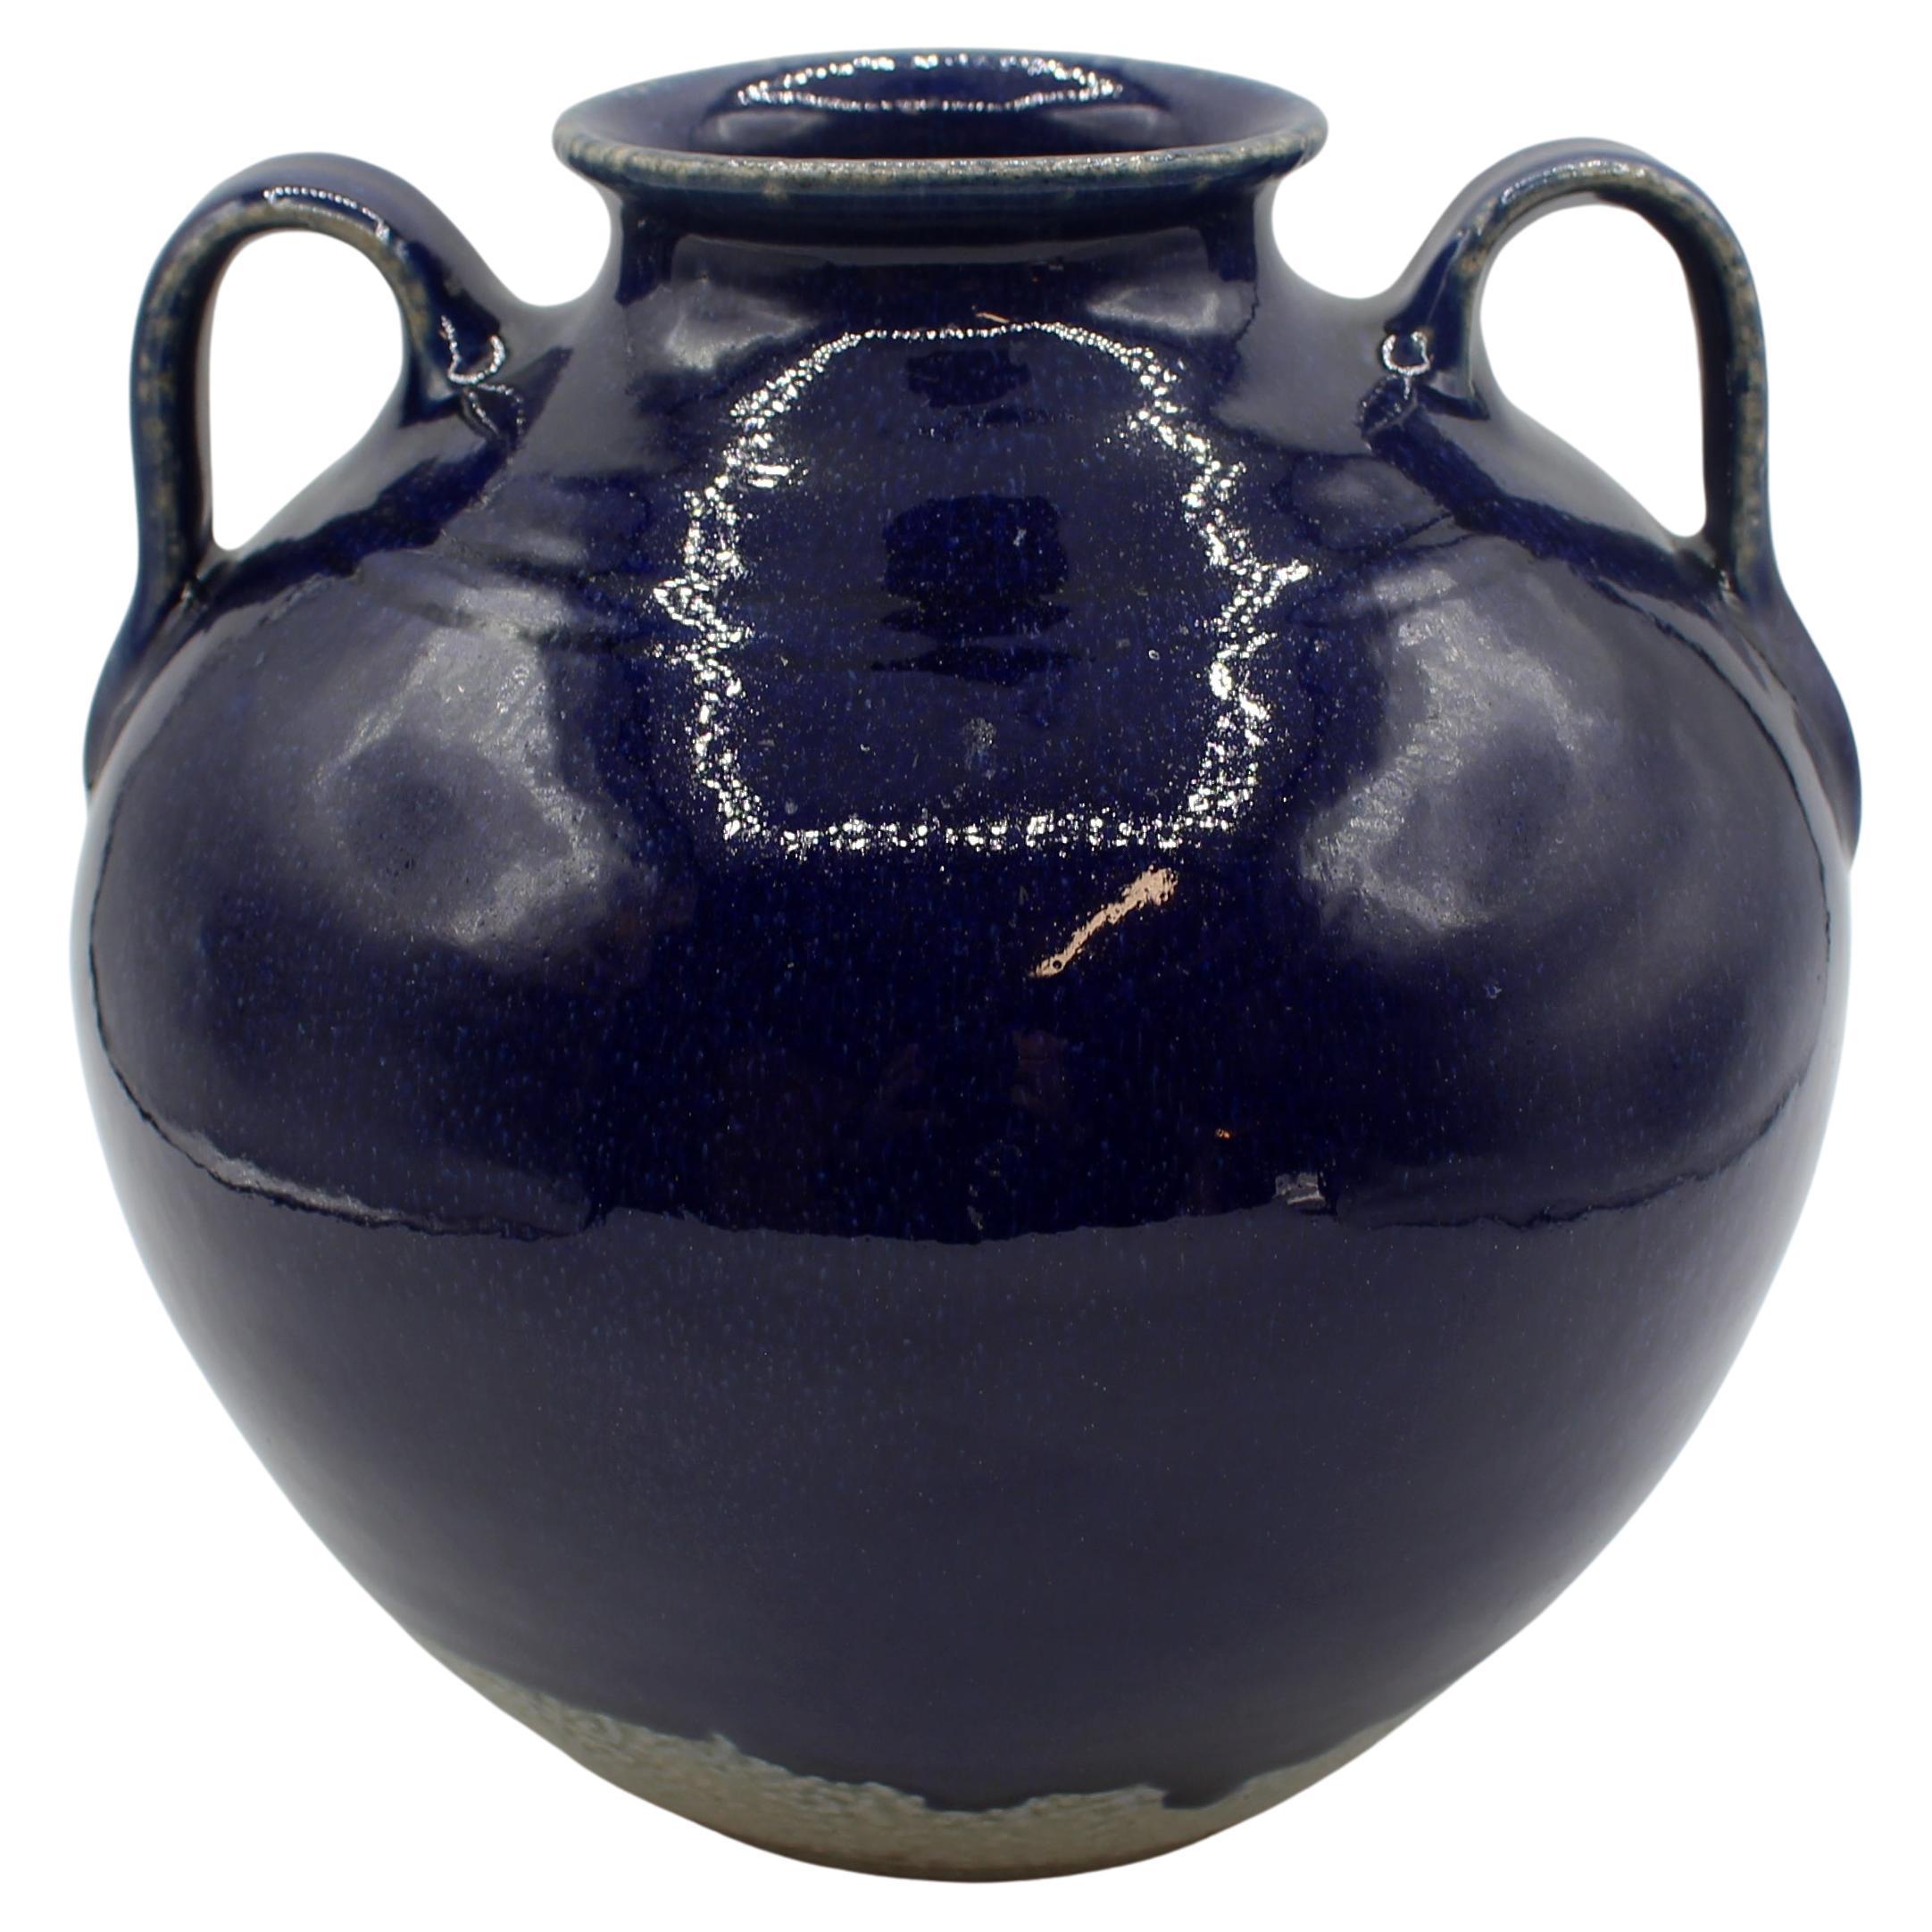 1993 Cobalt Blue Vase by Vernon Owens